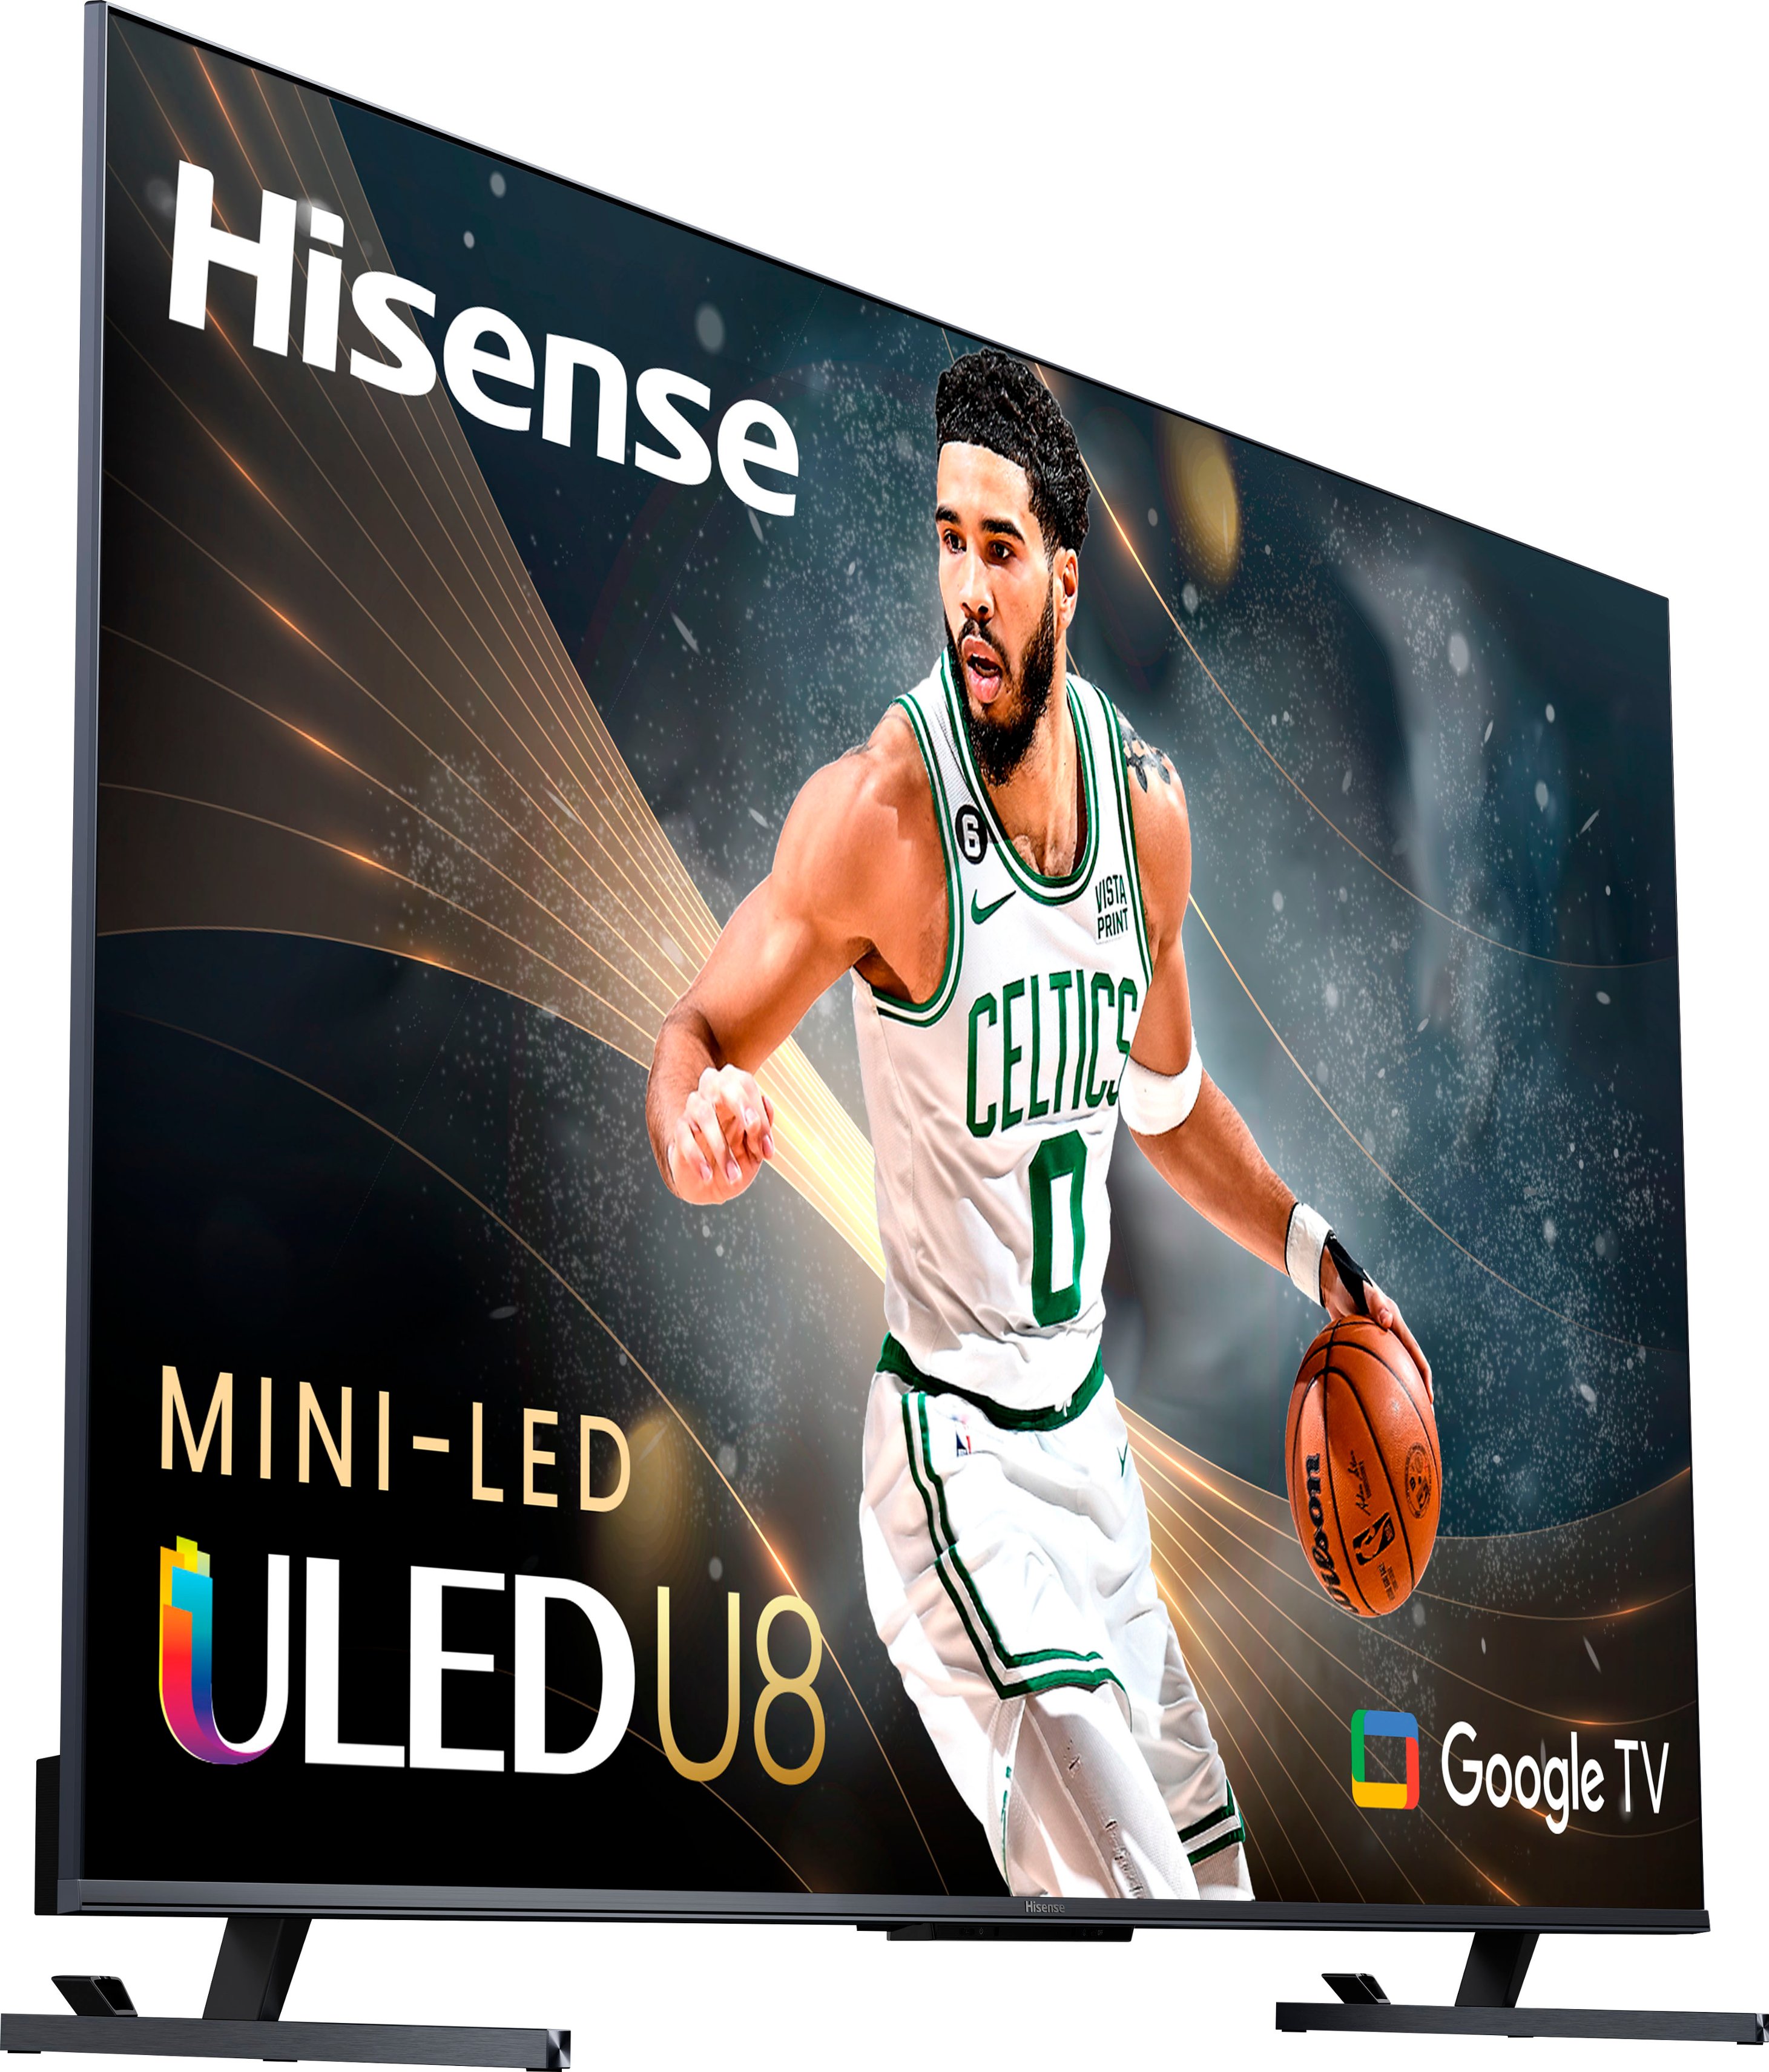 Hisense's U8K 4K mini-LED TV is already deeply discounted